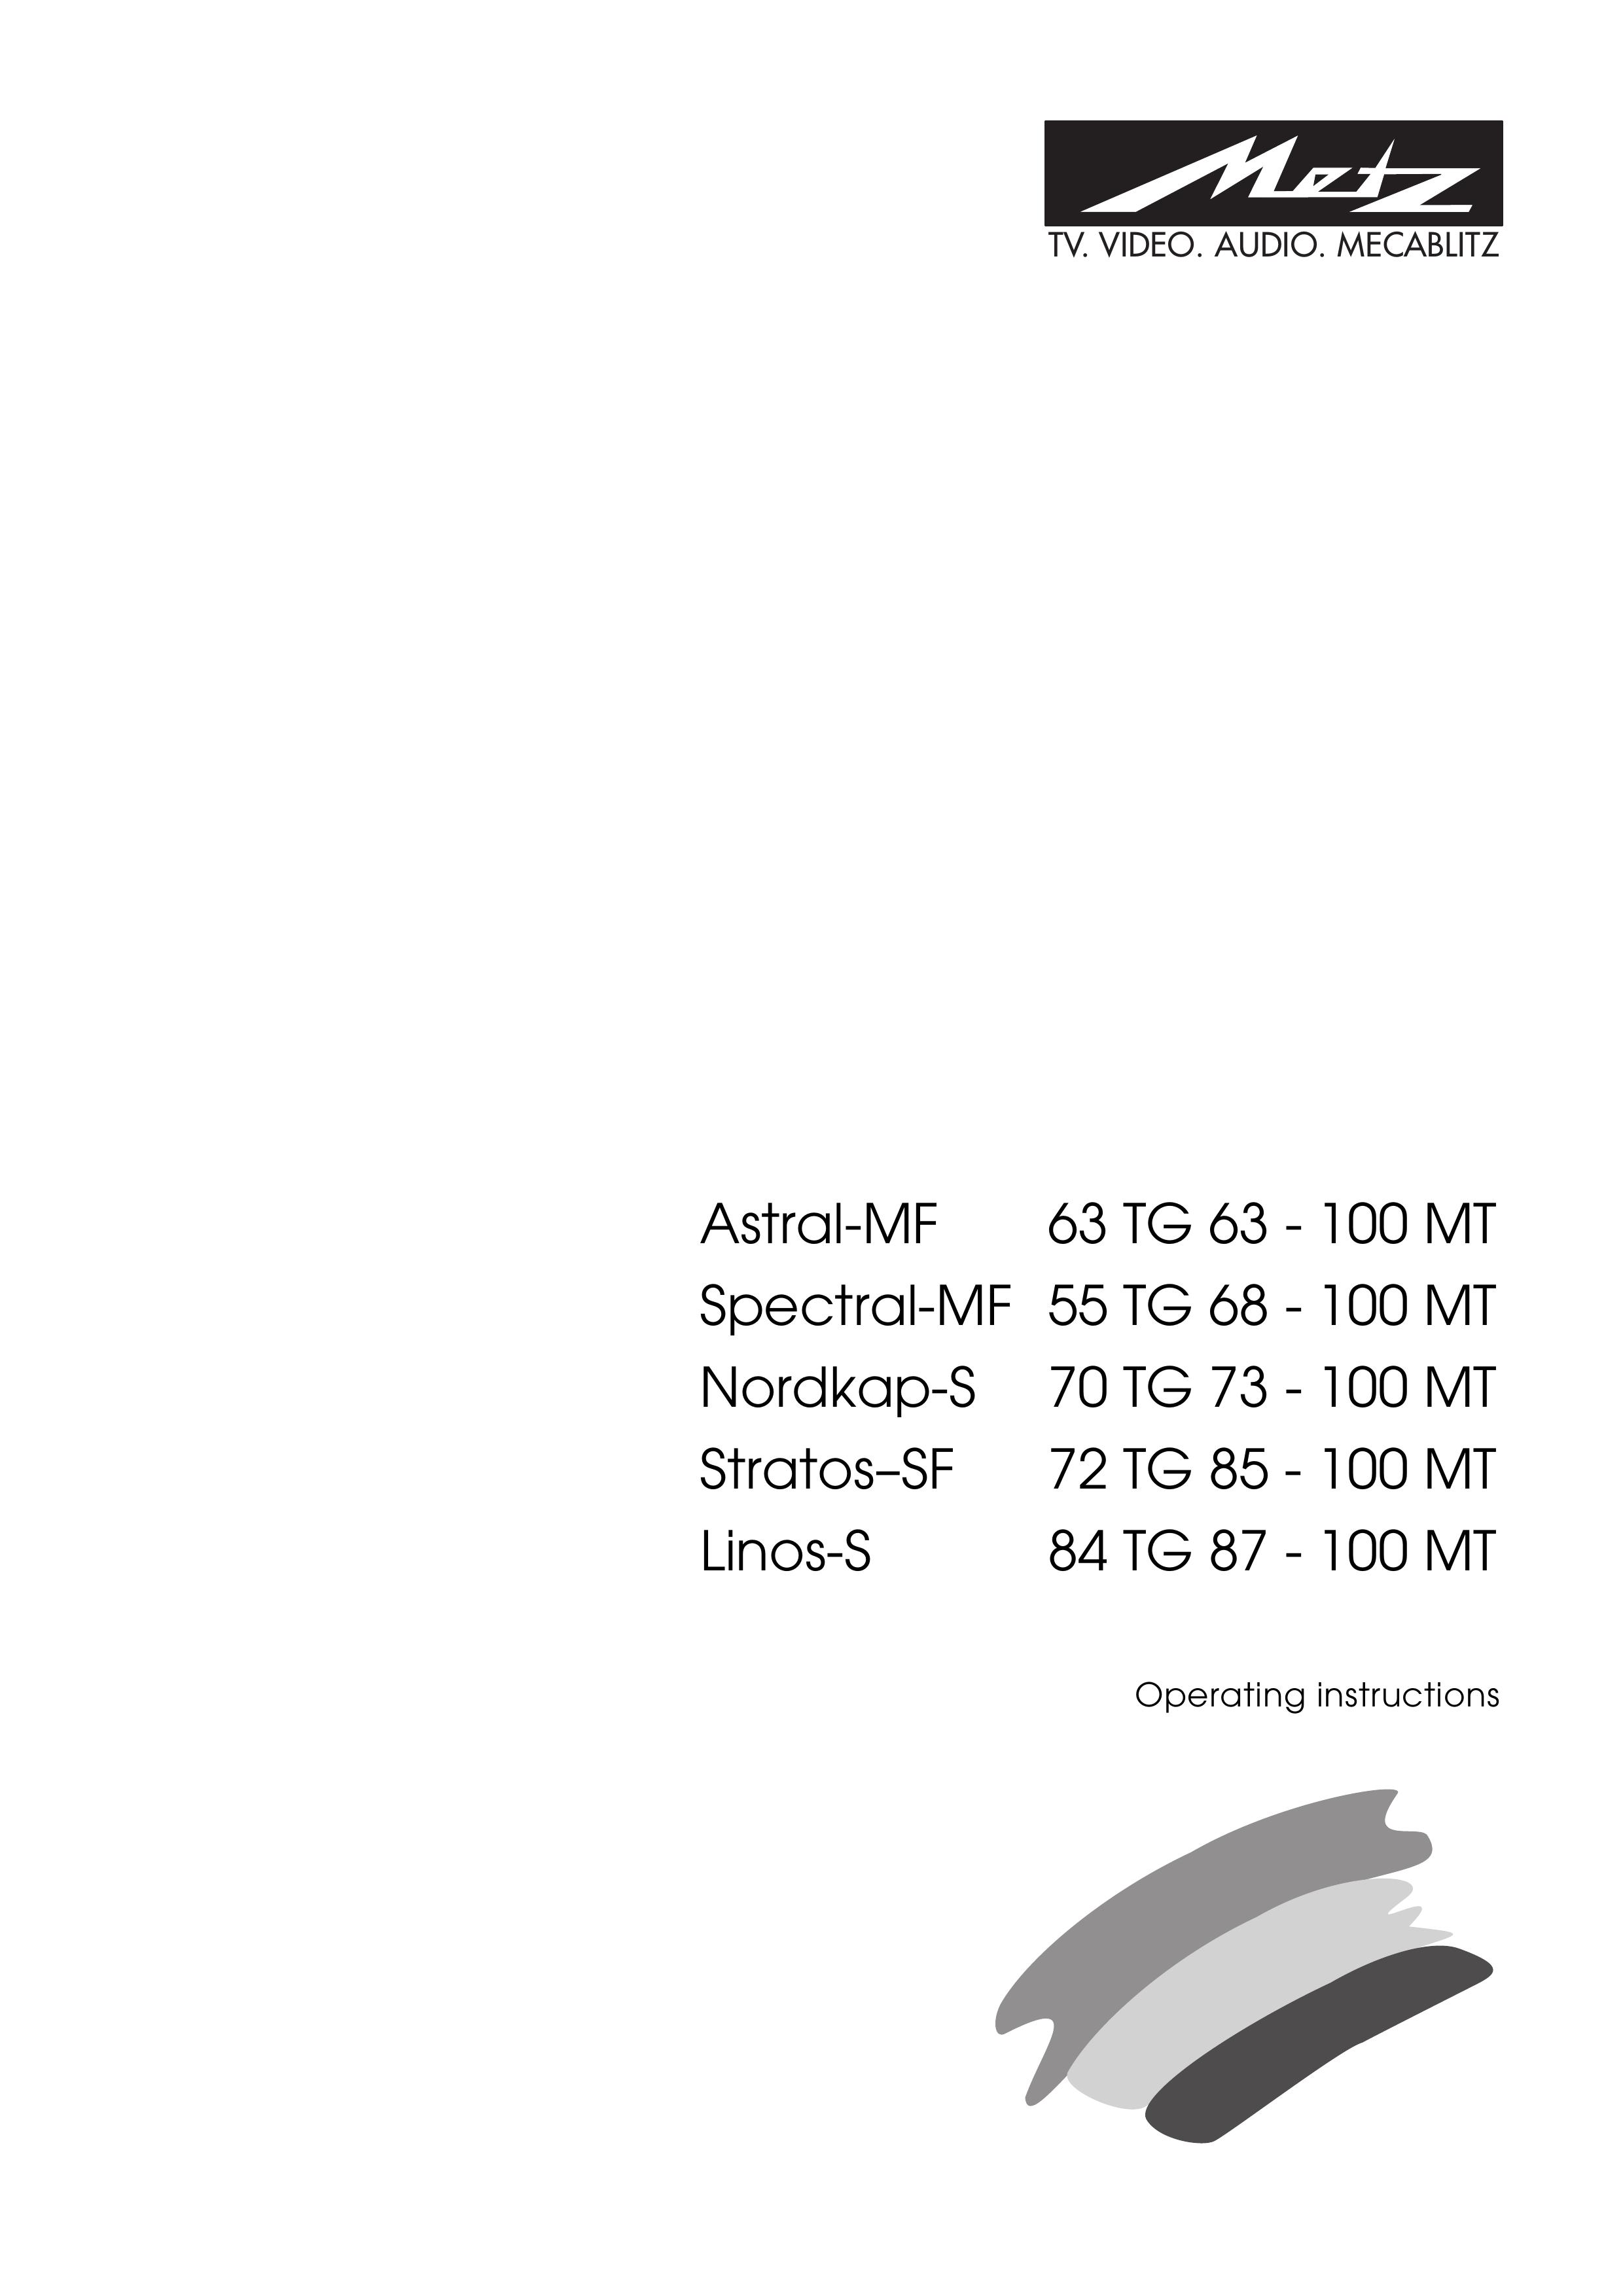 Metz Astral-MF 63 TG 63 - 100 MT, Spectral-MF 55 TG 68 - 100 MT, Nordkap-S 70 TG 73 - 100 MT, Stratos-SF 72 TG 85 - 100 MT, Linos-S 84 TG 87 - 100 MT Camcorder User Manual